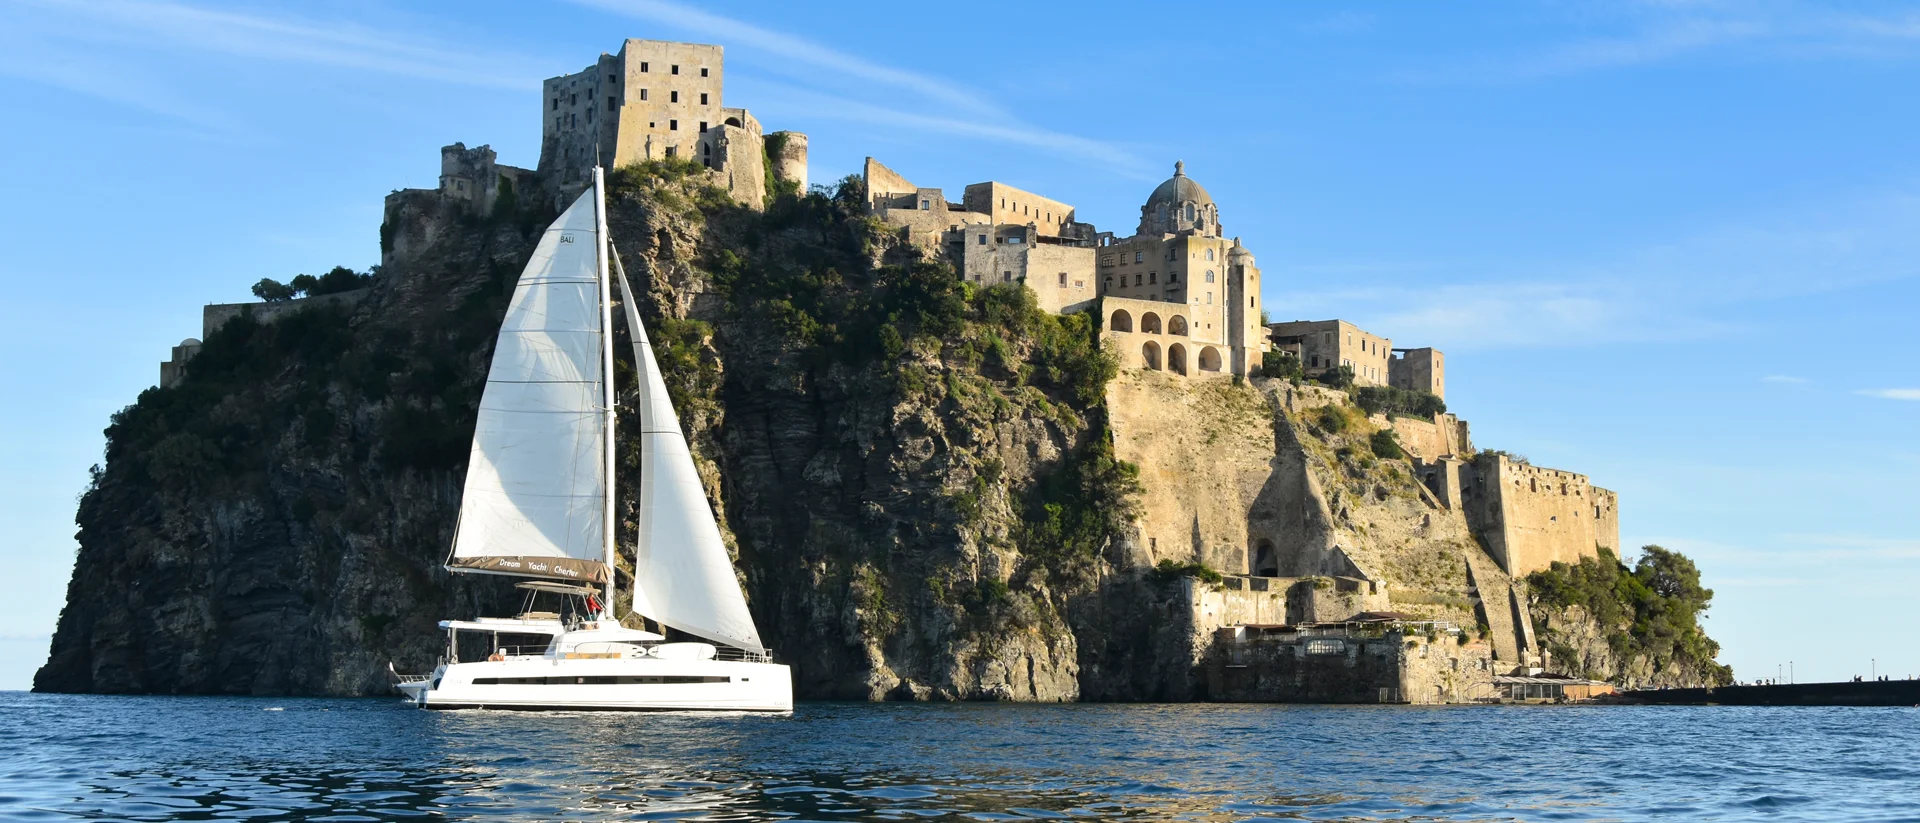 Neapel segling ö antik arkitektur segelbåtscharter